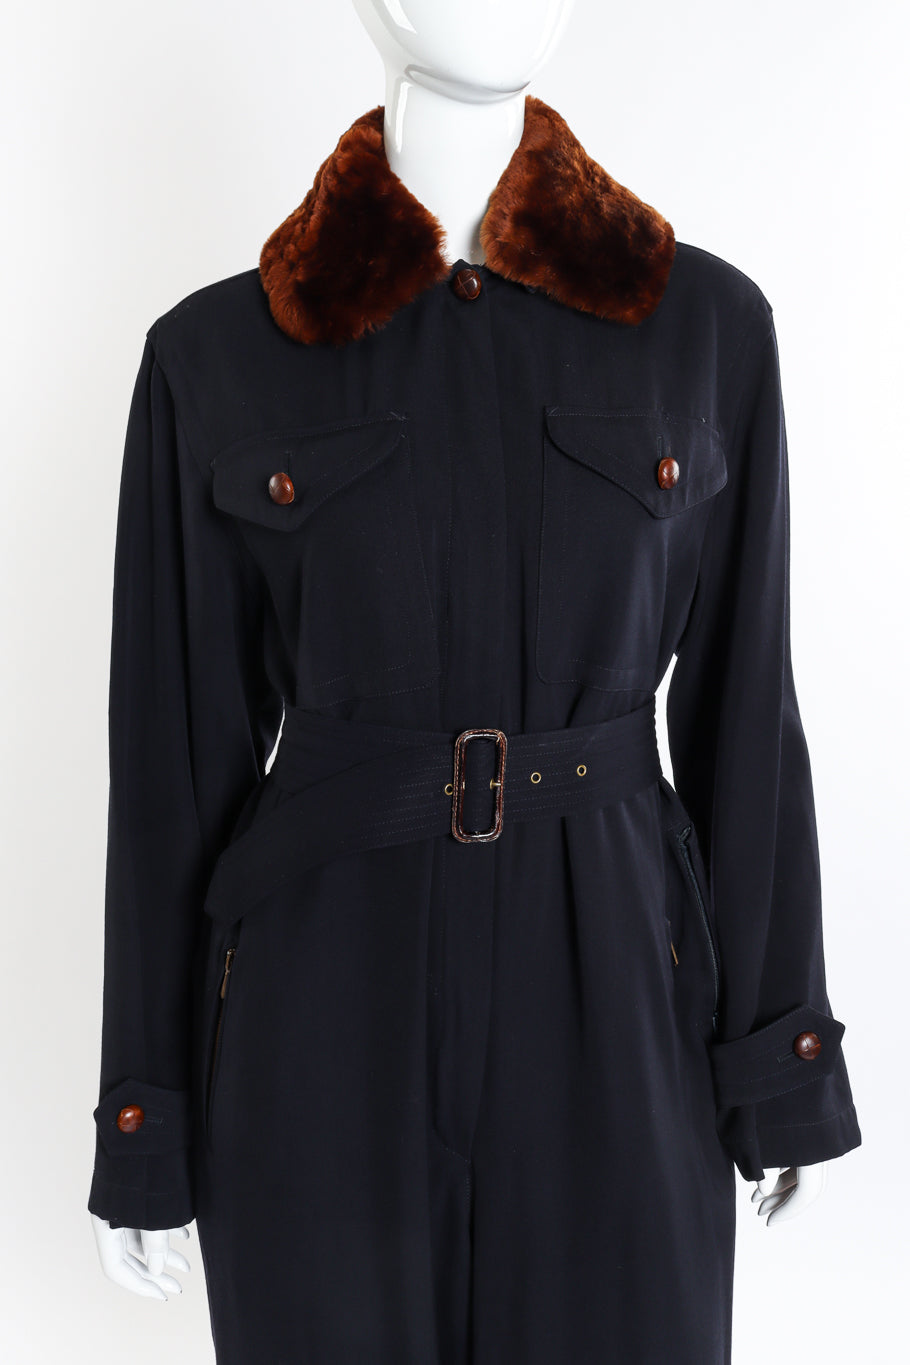 Jean Paul Gaultier Femme Fur Trim Flight Suit front on mannequin closeup @recessla